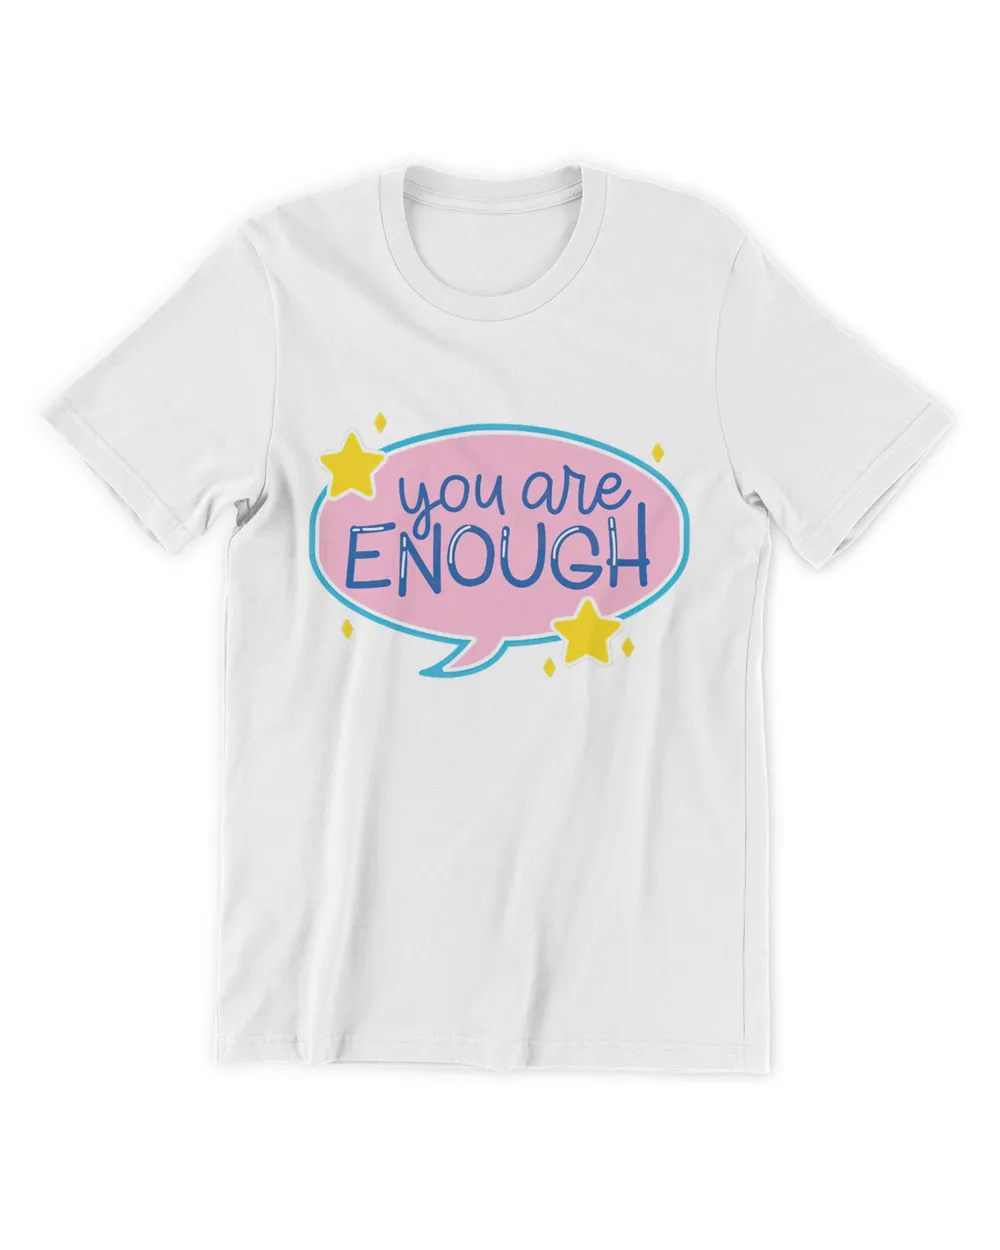 You Are Enough Shirt